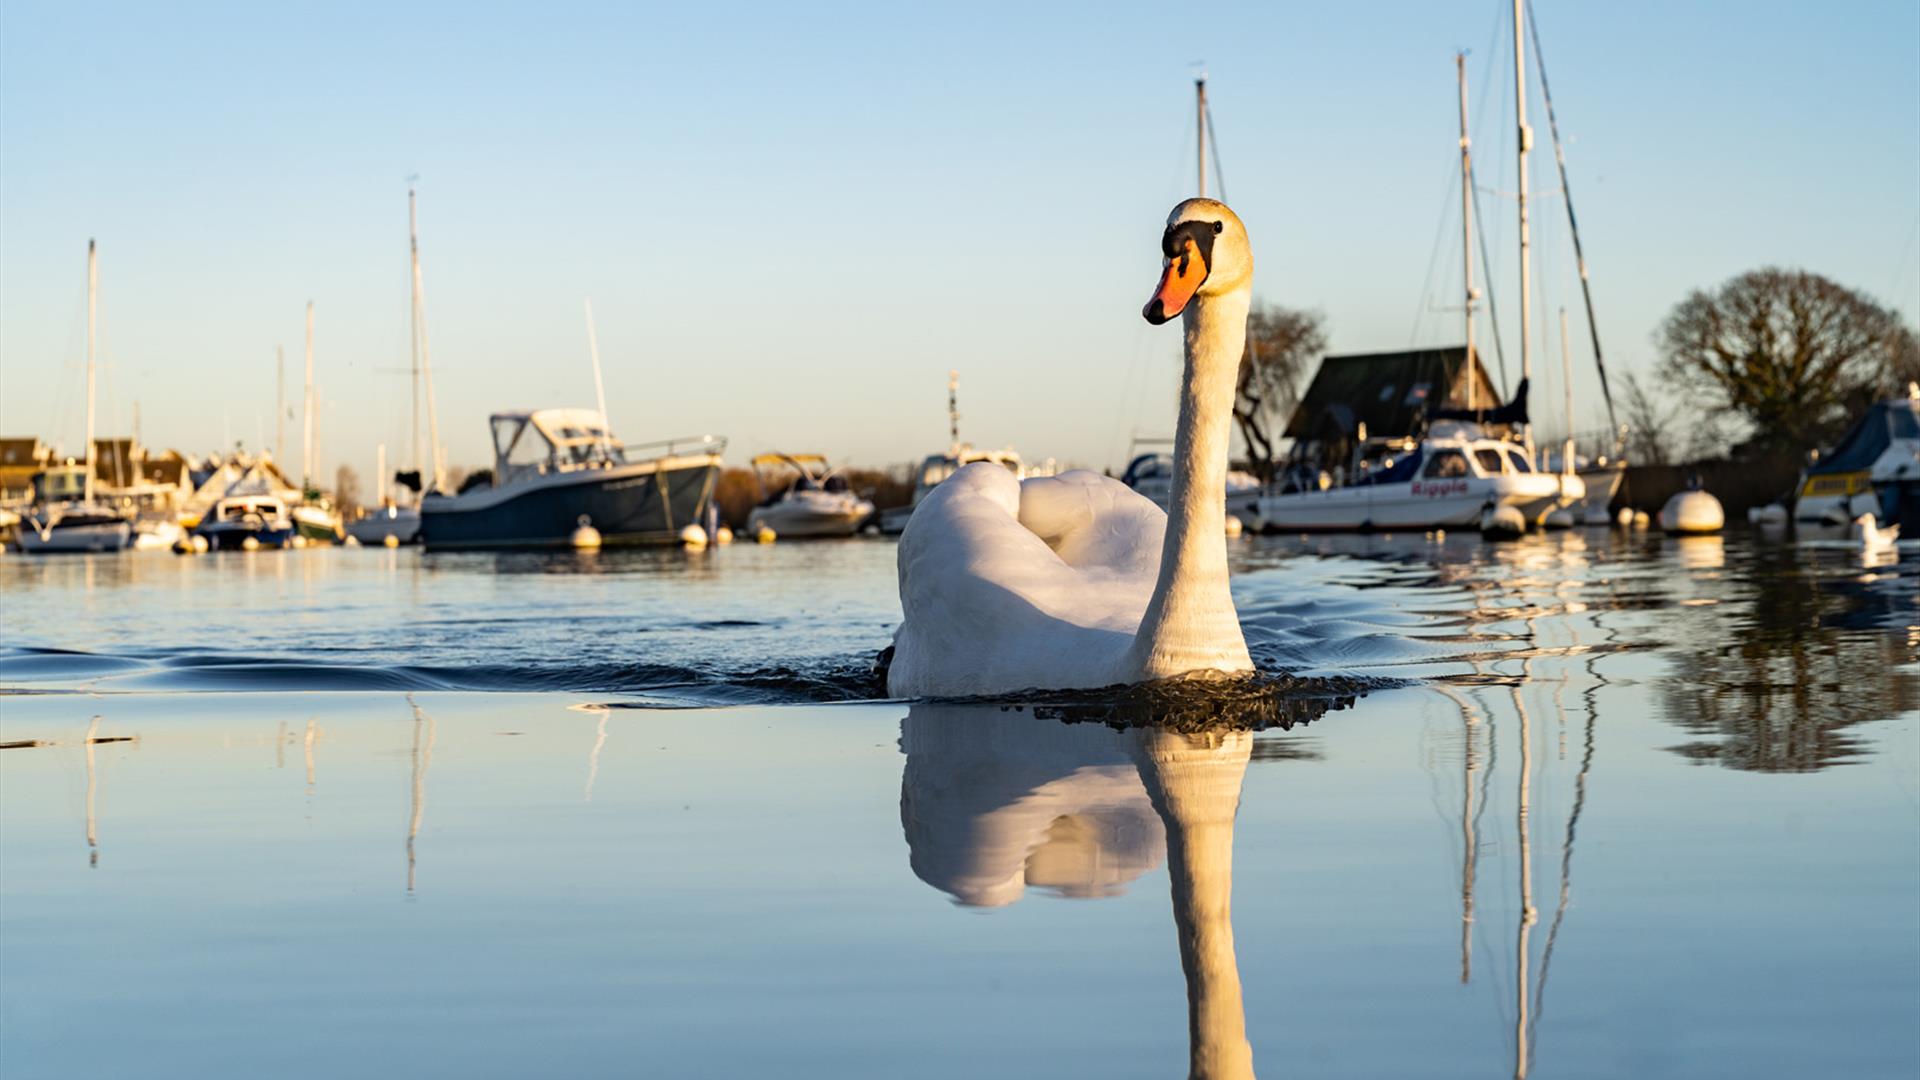 Majestic swan swimming in the still water